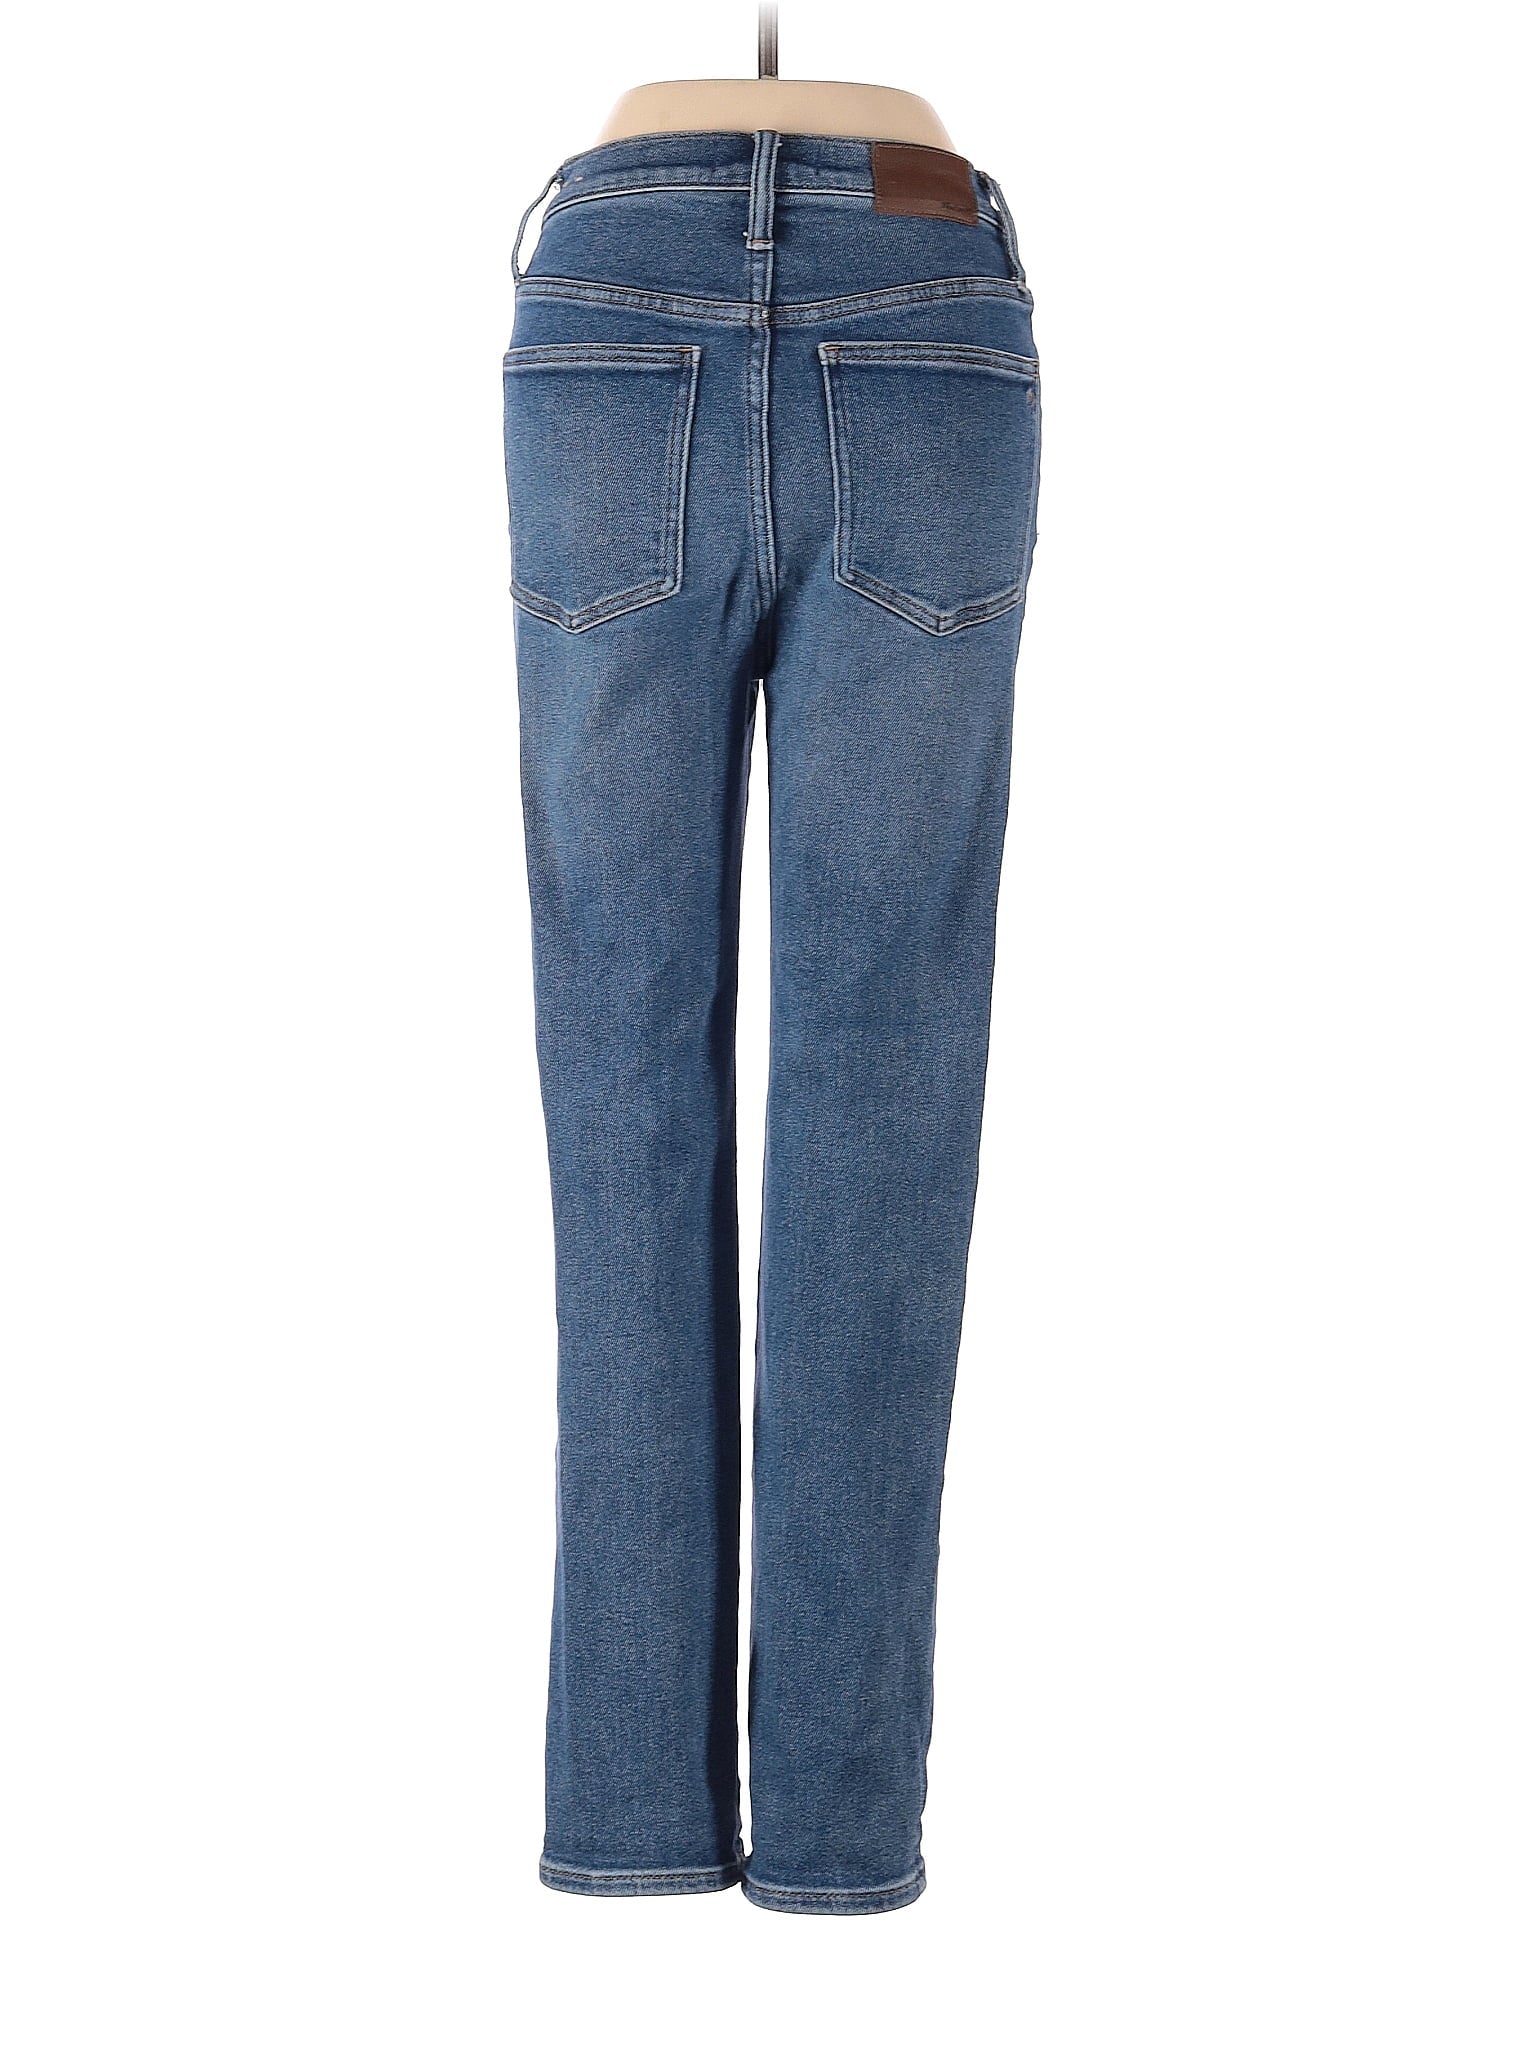 High-Rise Straight-leg Jeans in Medium Wash waist size - 26